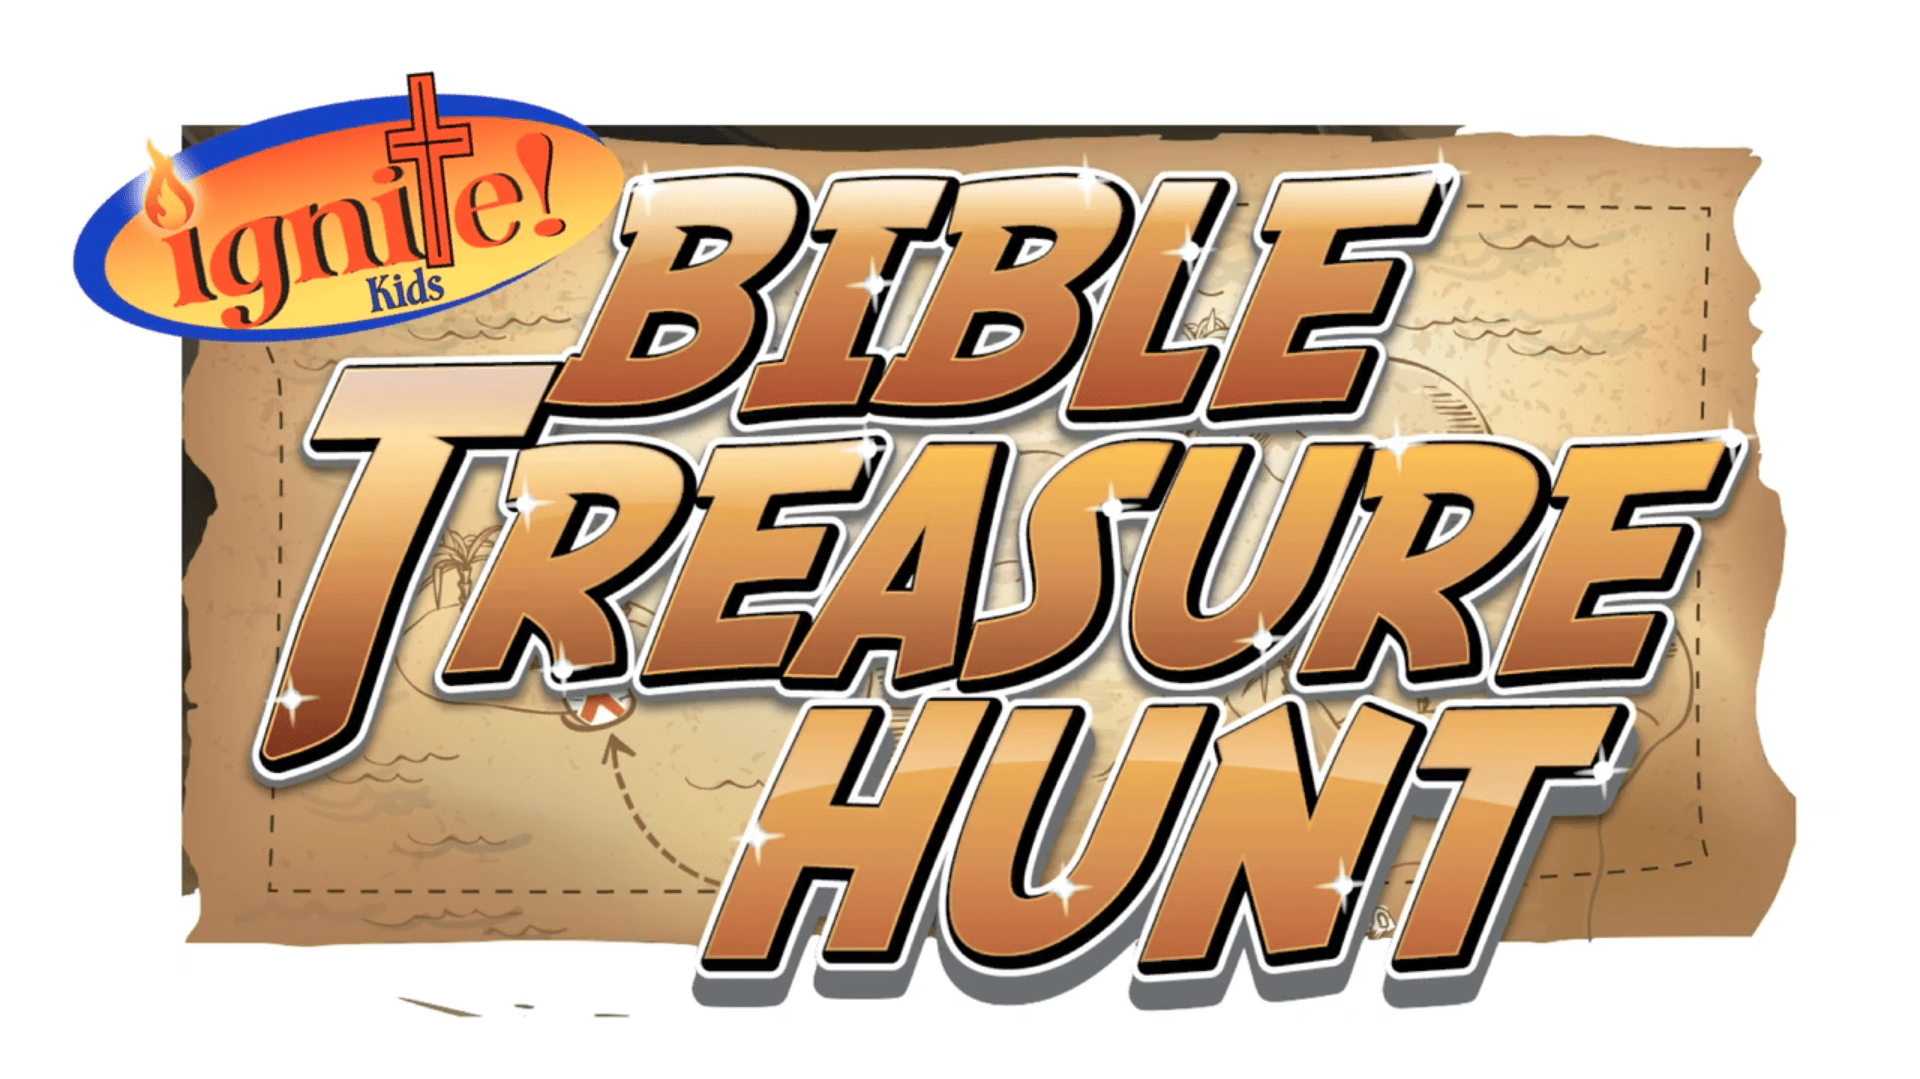 bible treasure hunt image kids ignite live stream la casa de cristo lutheran church scottsdale arizona